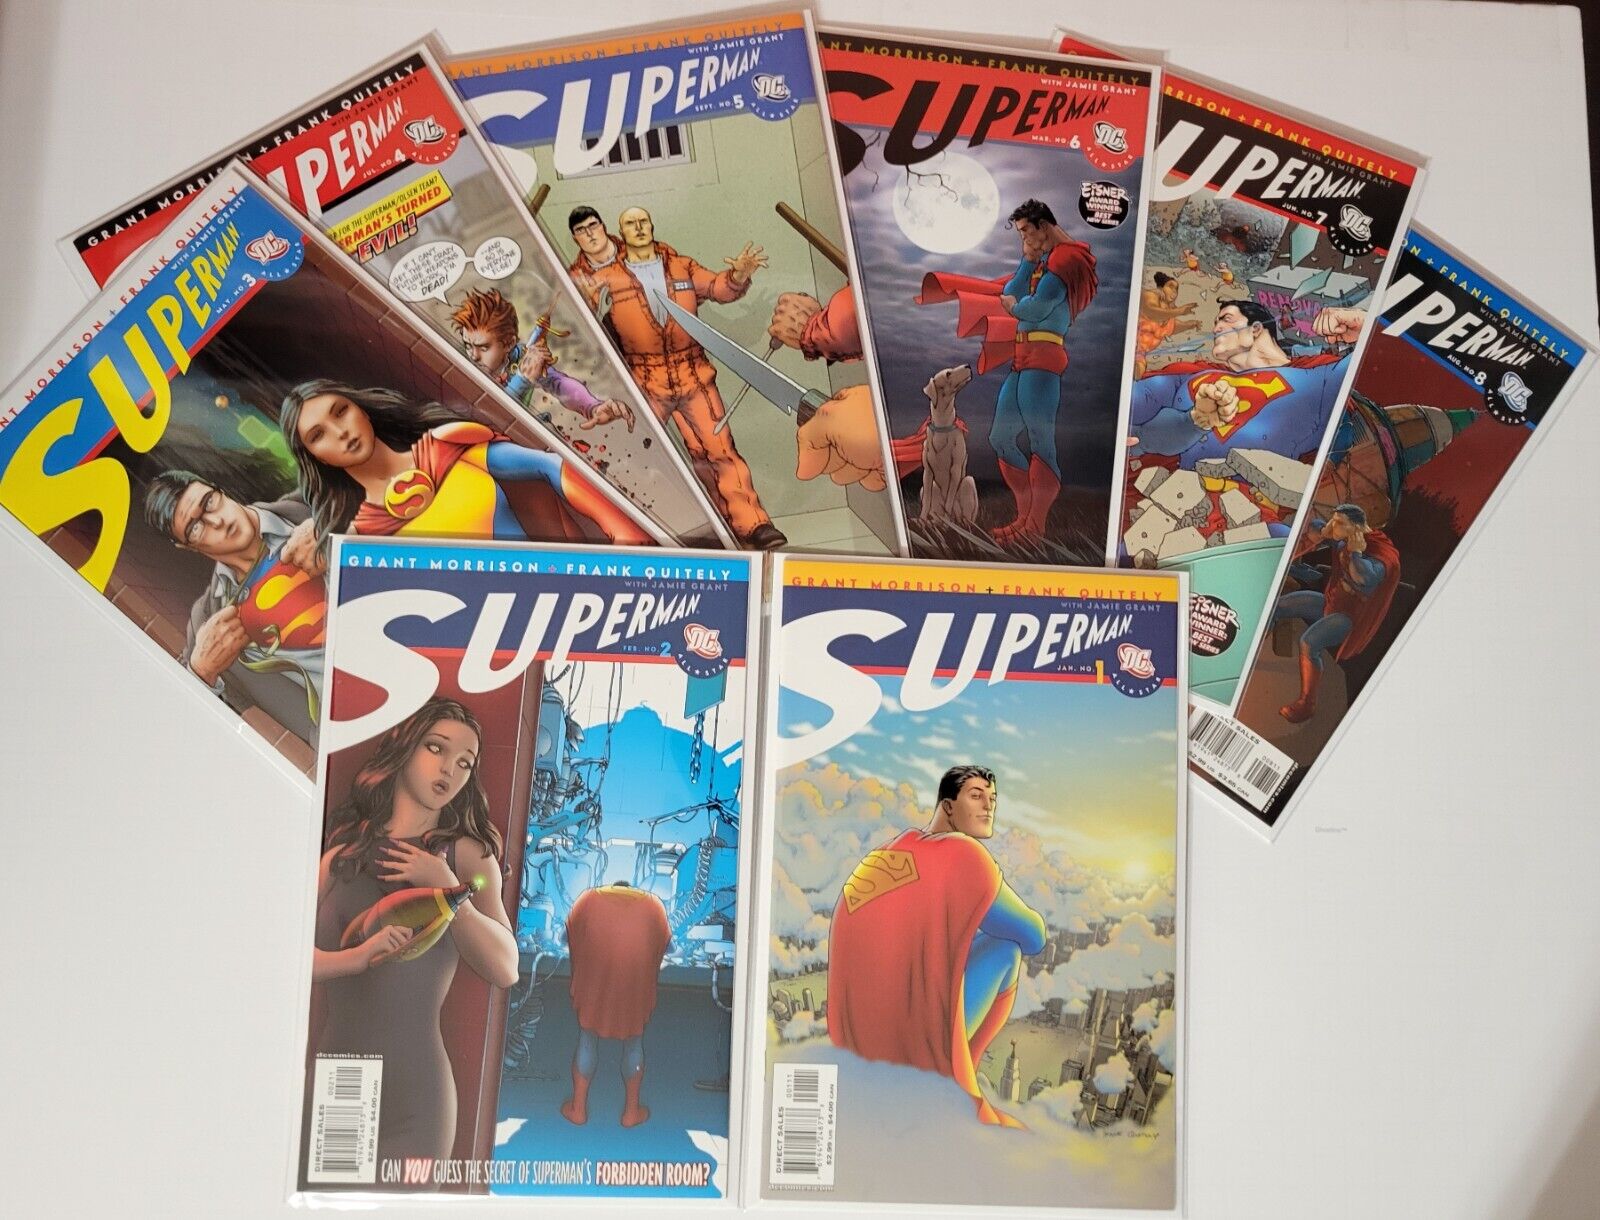 All Star Superman #1 - #8 Quitely Grant Morrison DC comics DCU Lot of 8